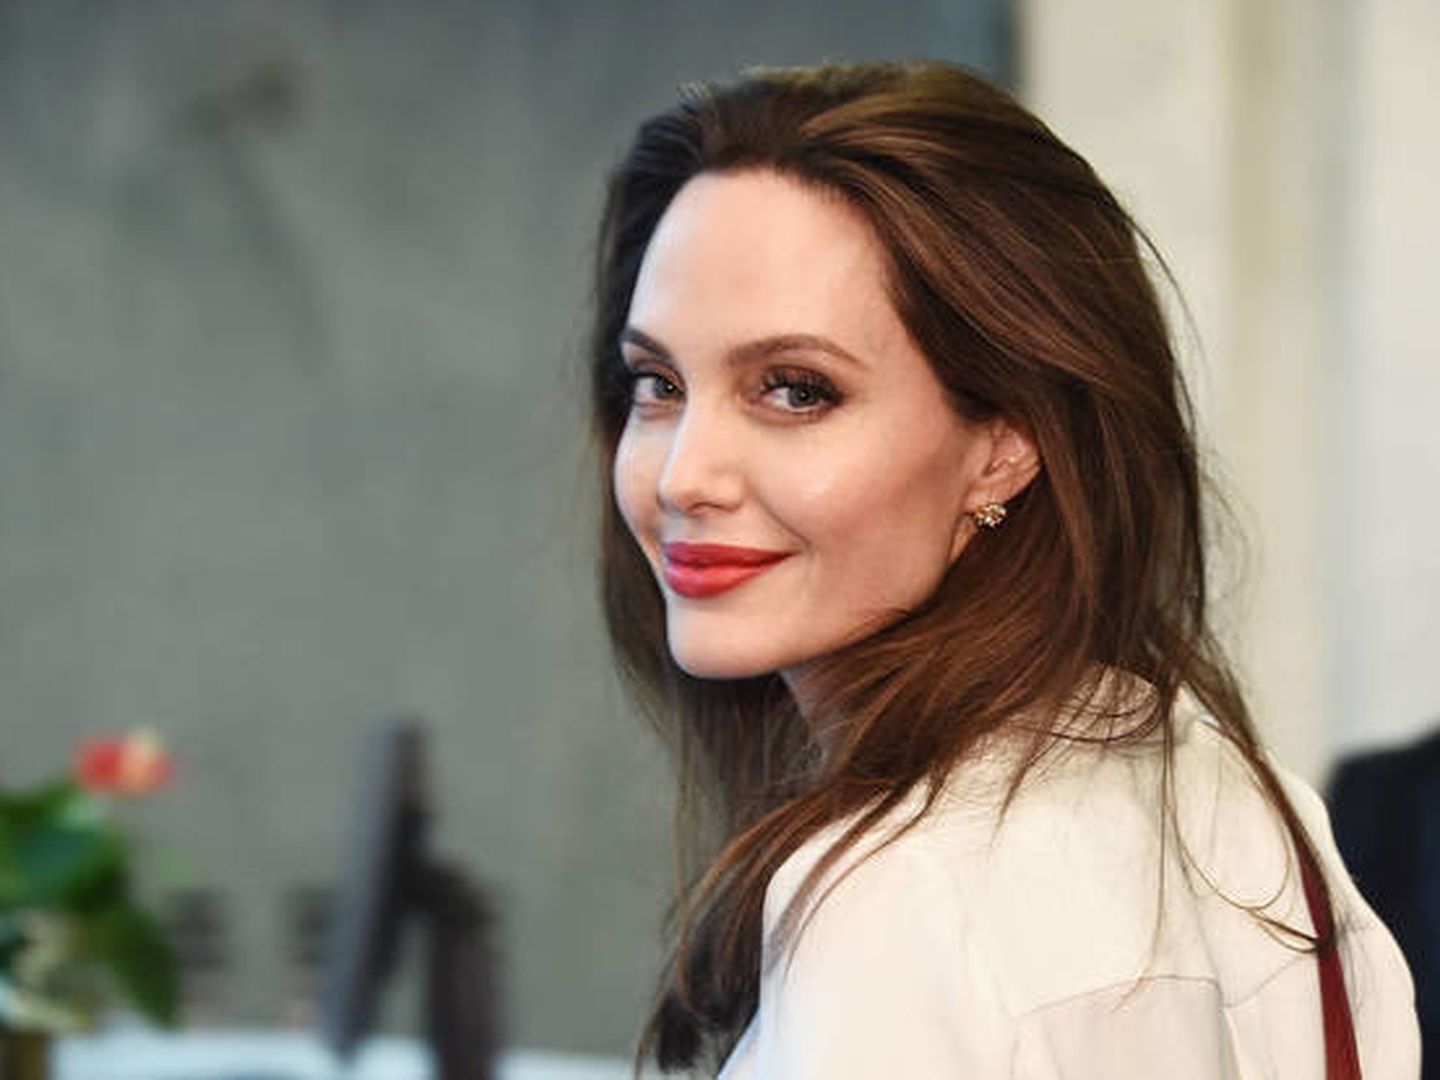  Angelina Jolie. (Getty)